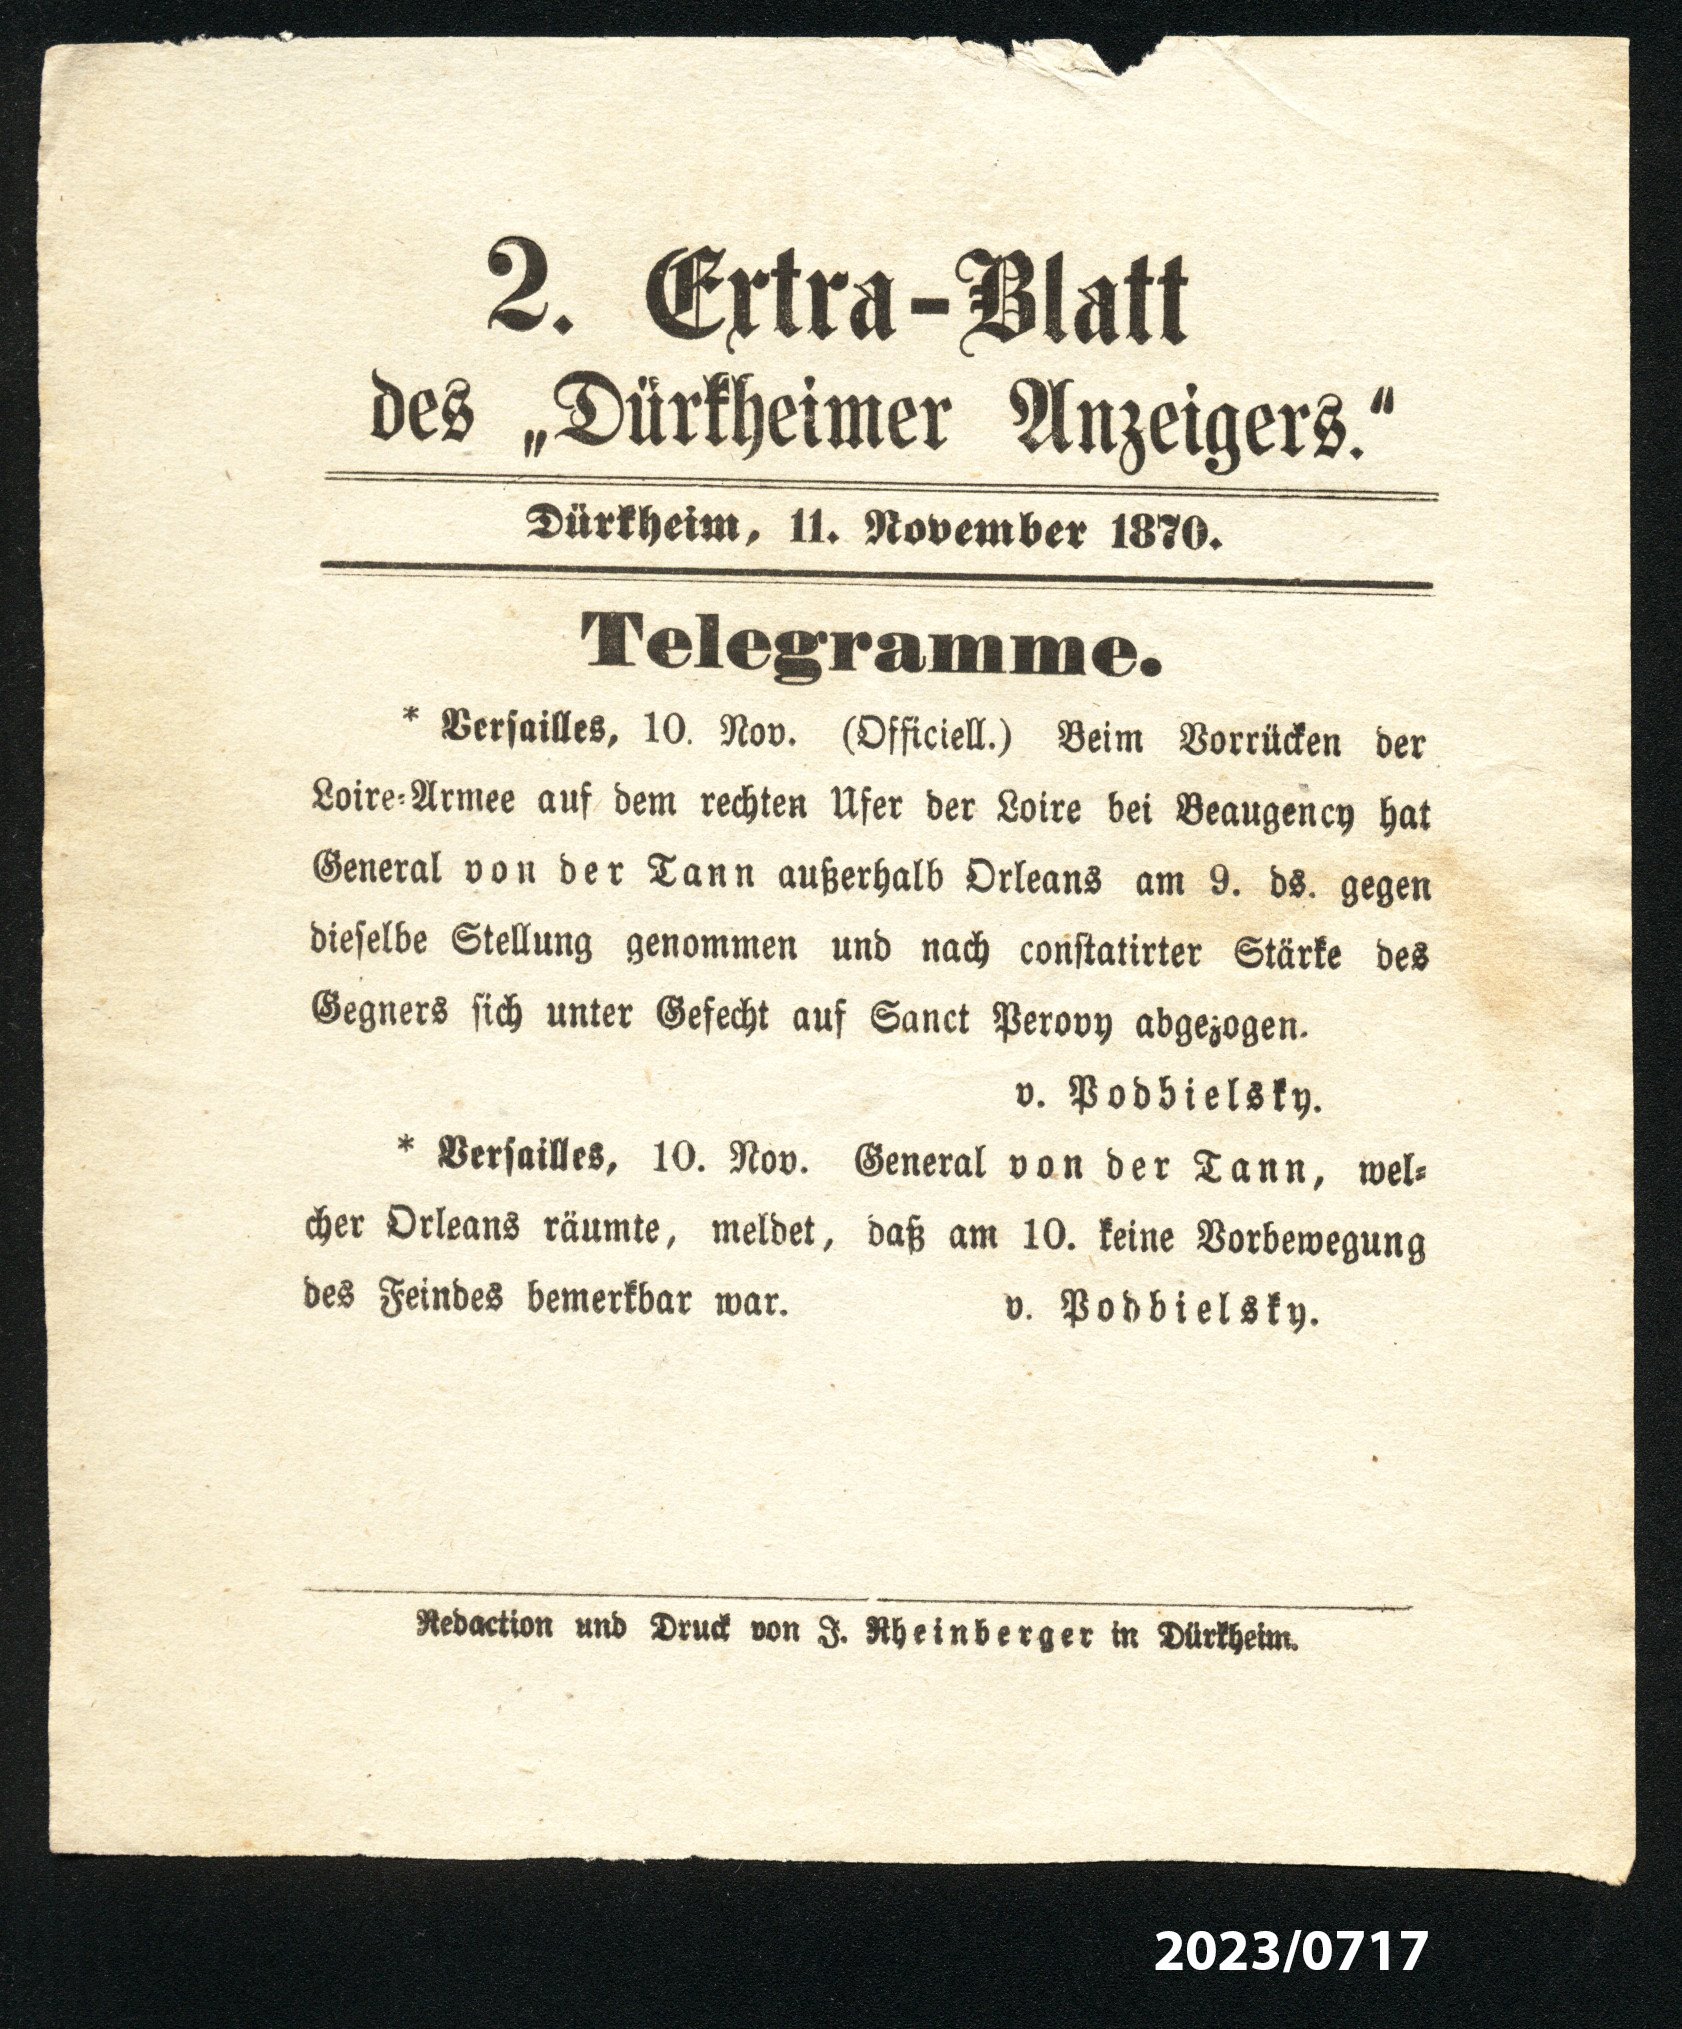 2. Extra-Blatt des "Dürkheimer Anzeigers." 11.11.1870 (Stadtmuseum Bad Dürkheim im Kulturzentrum Haus Catoir CC BY-NC-SA)